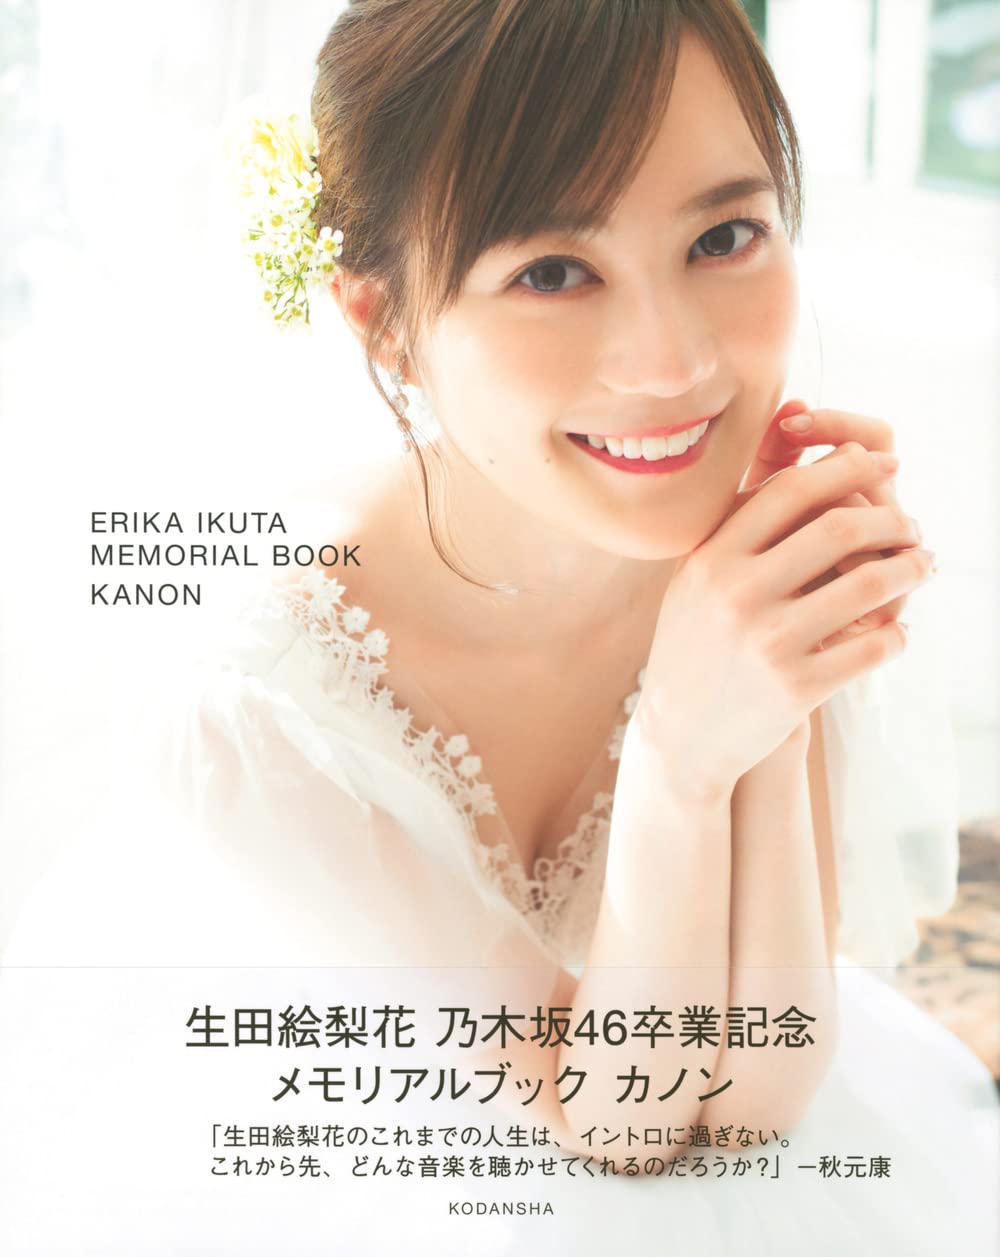 Erika Ikuta Memorial Book "Kanon" / Nogizaka46